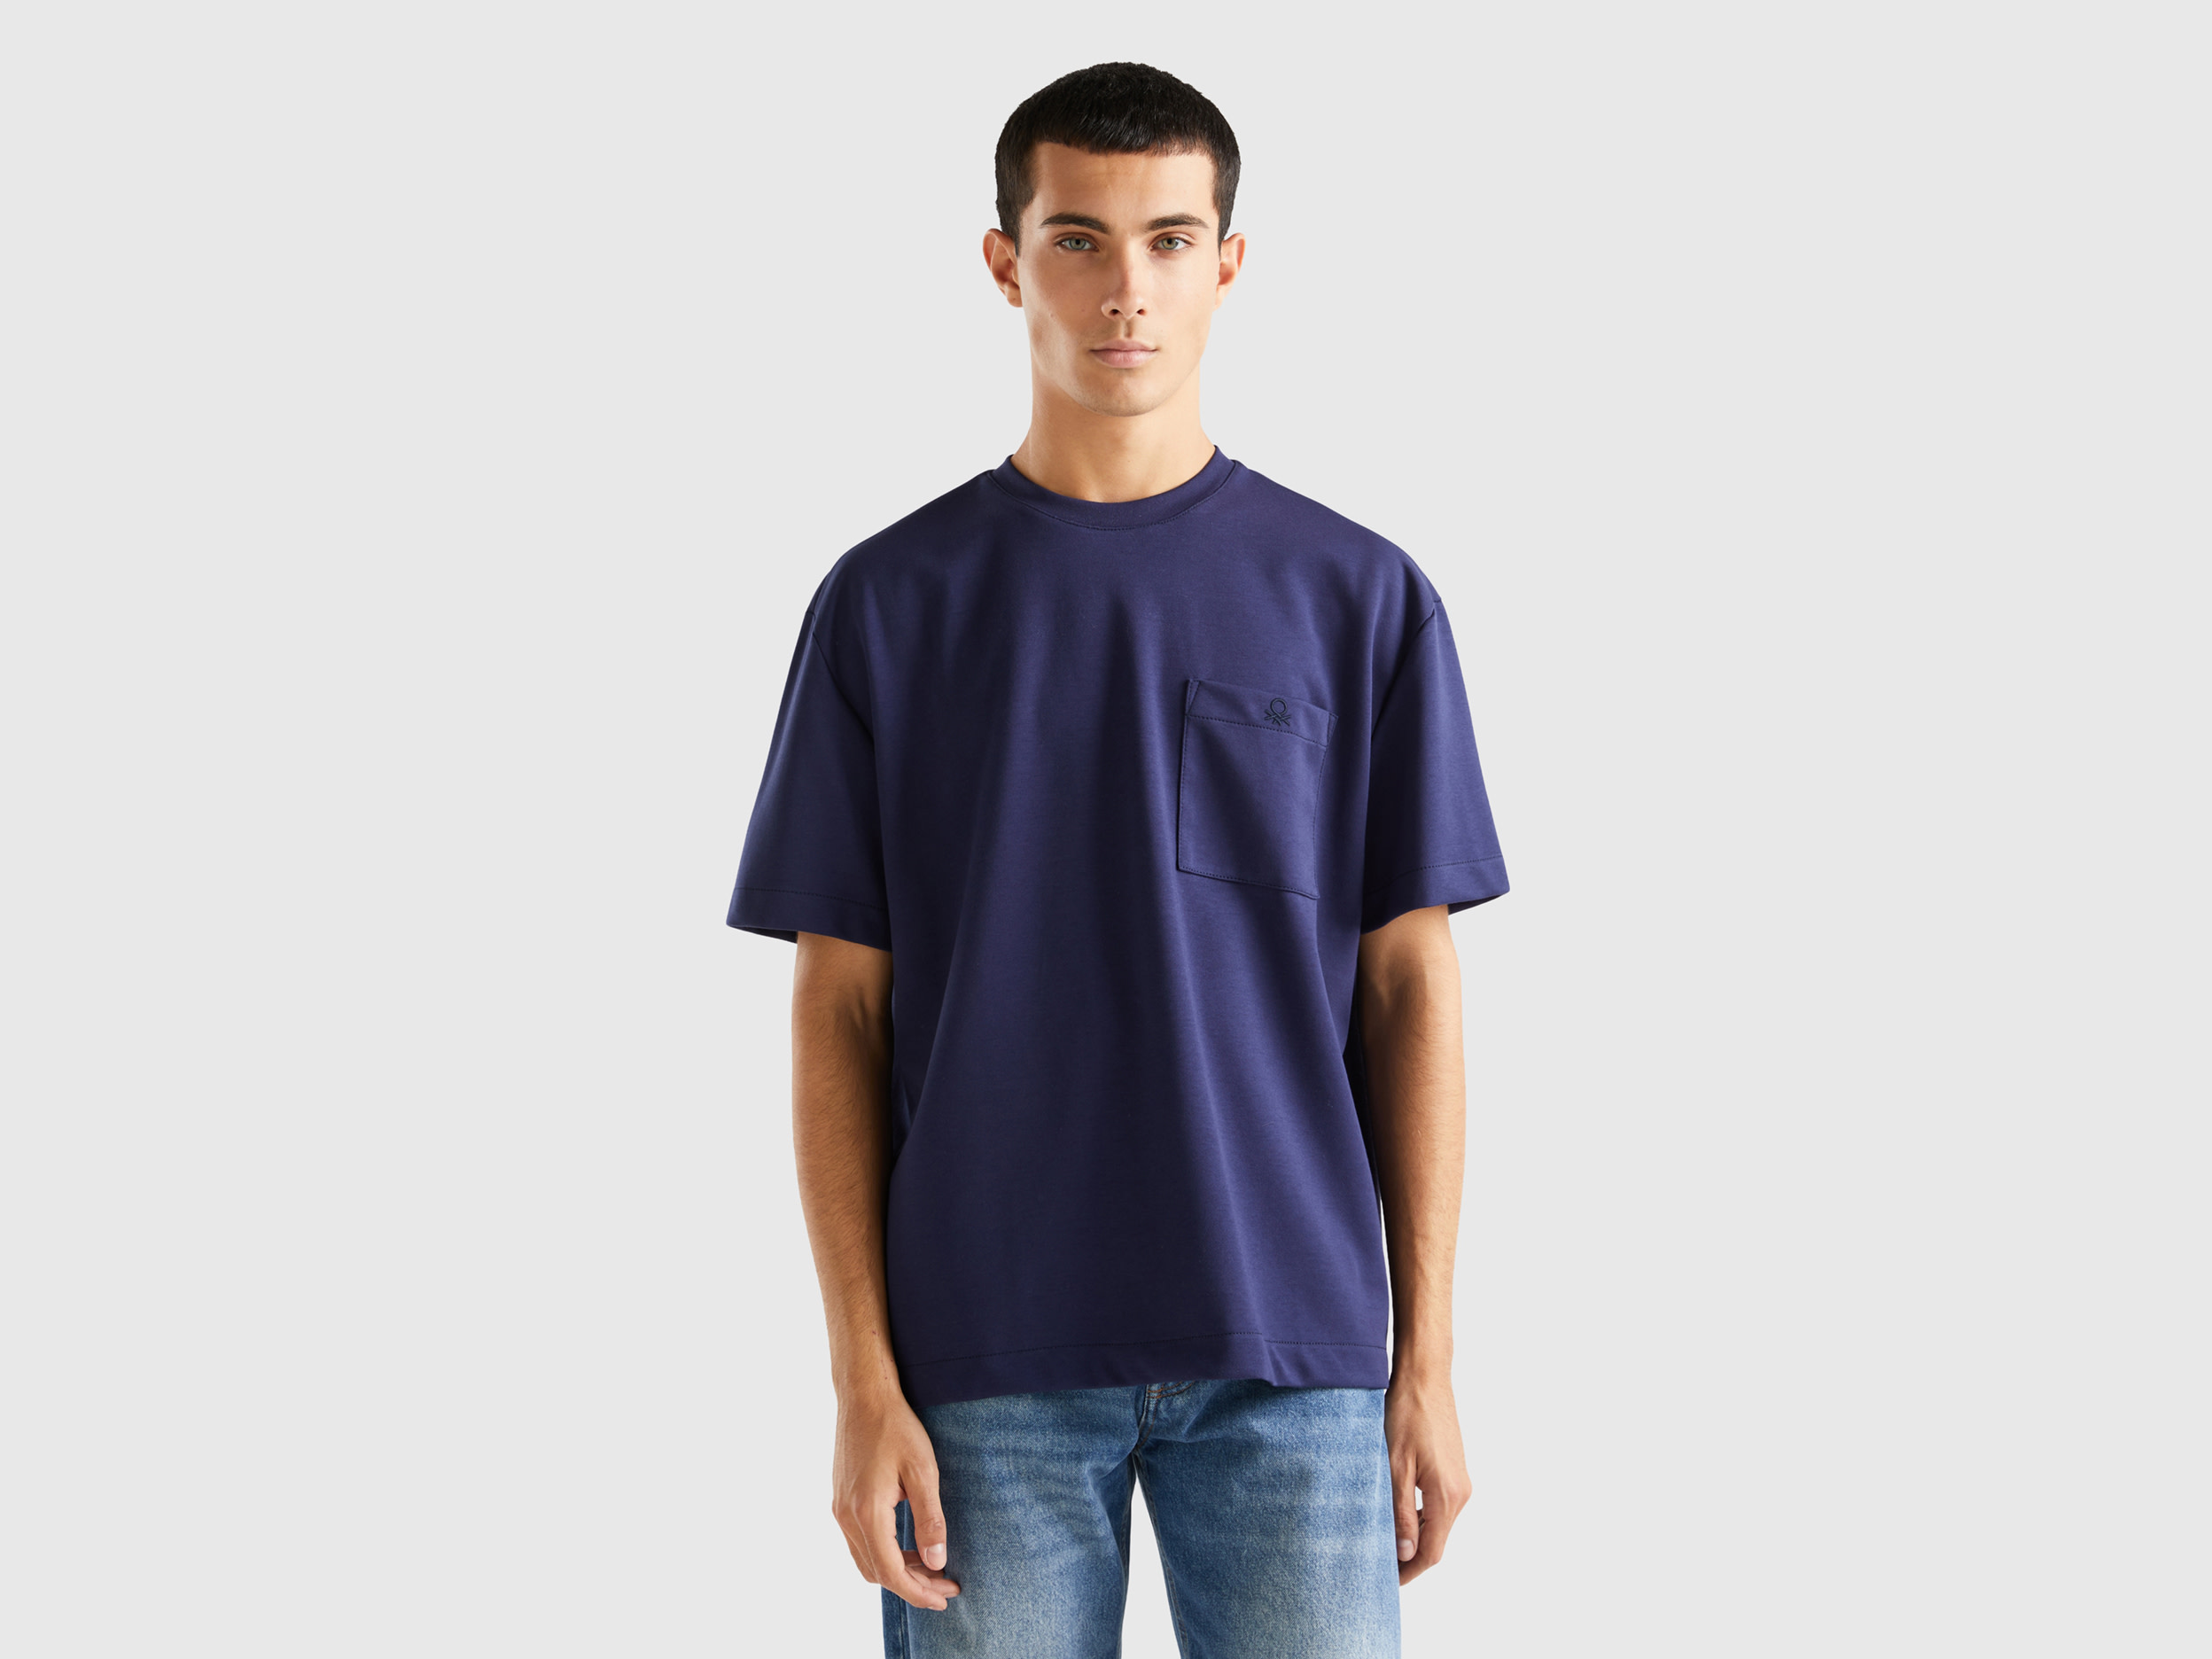 Benetton, Oversized T-shirt With Pocket, size L, Dark Blue, Men